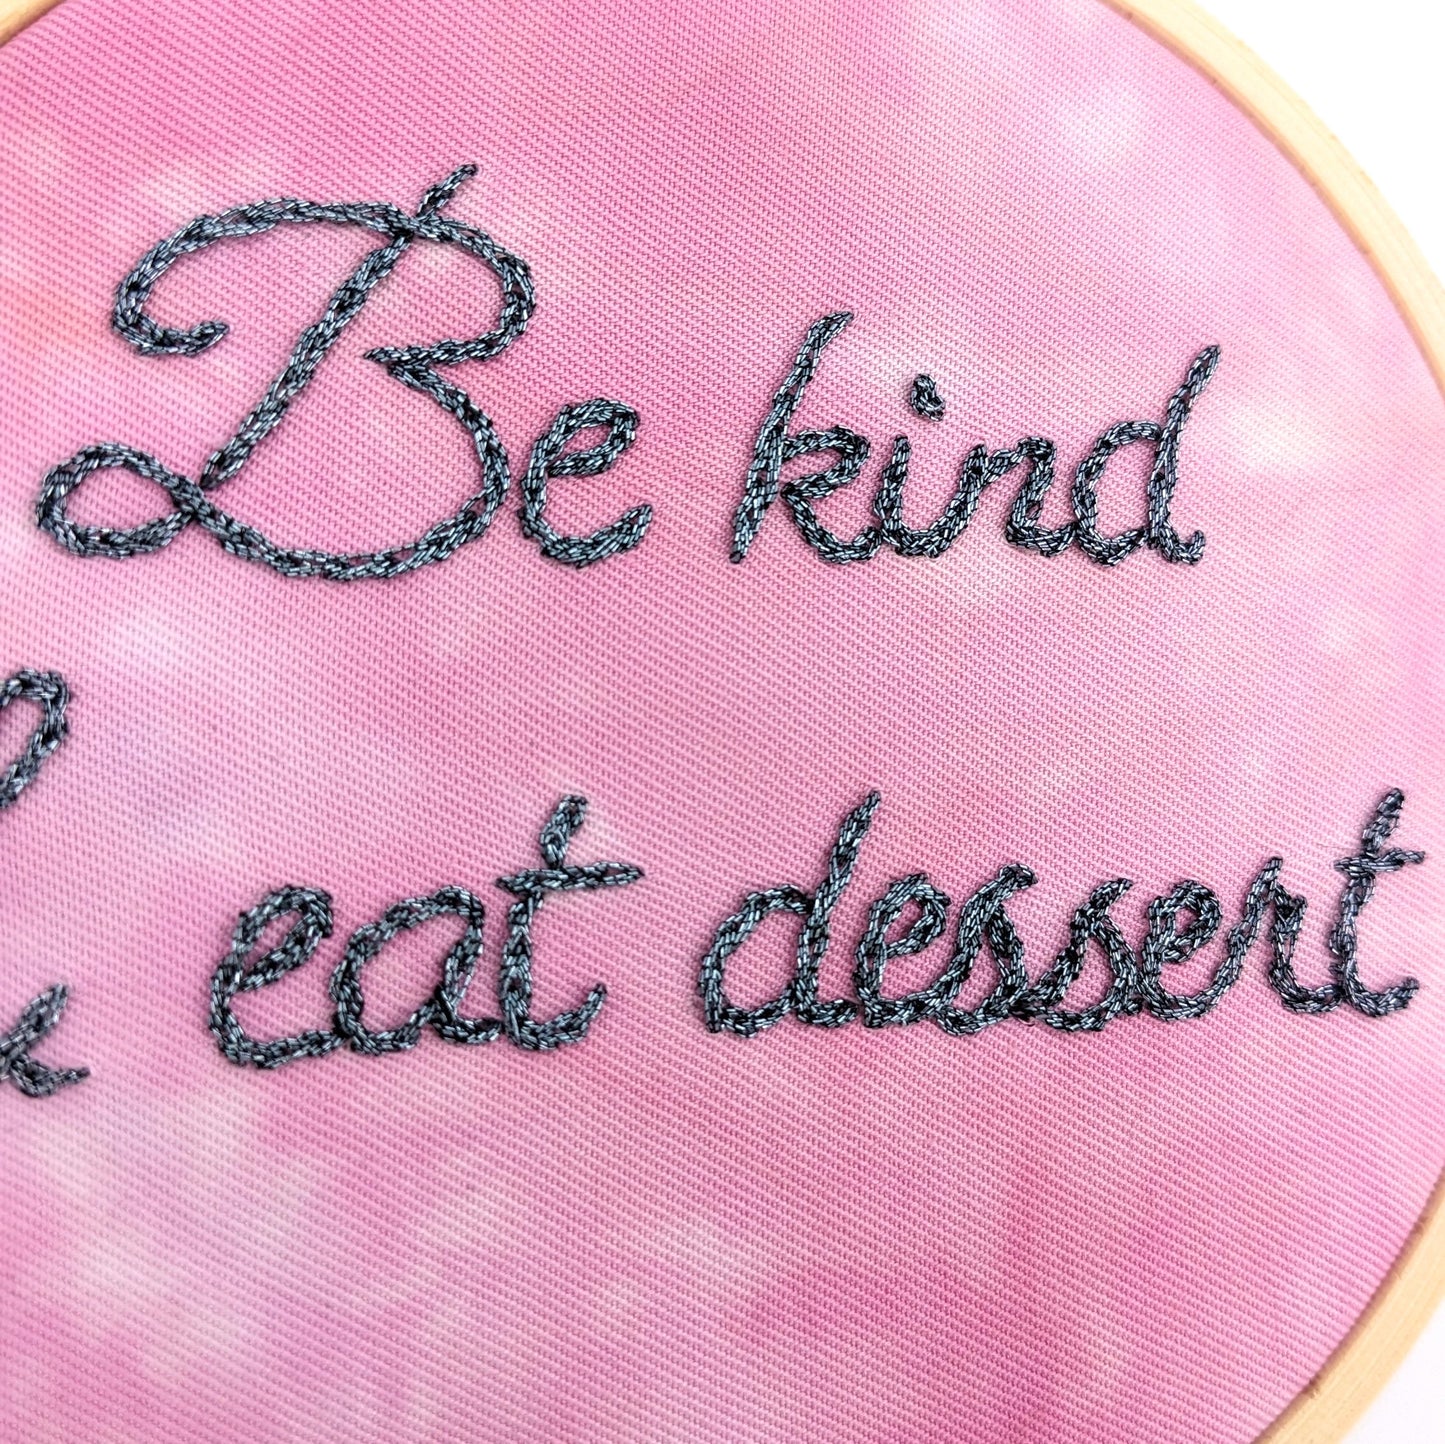 "Be Kind & Eat Dessert" Embroidery Hoop Art